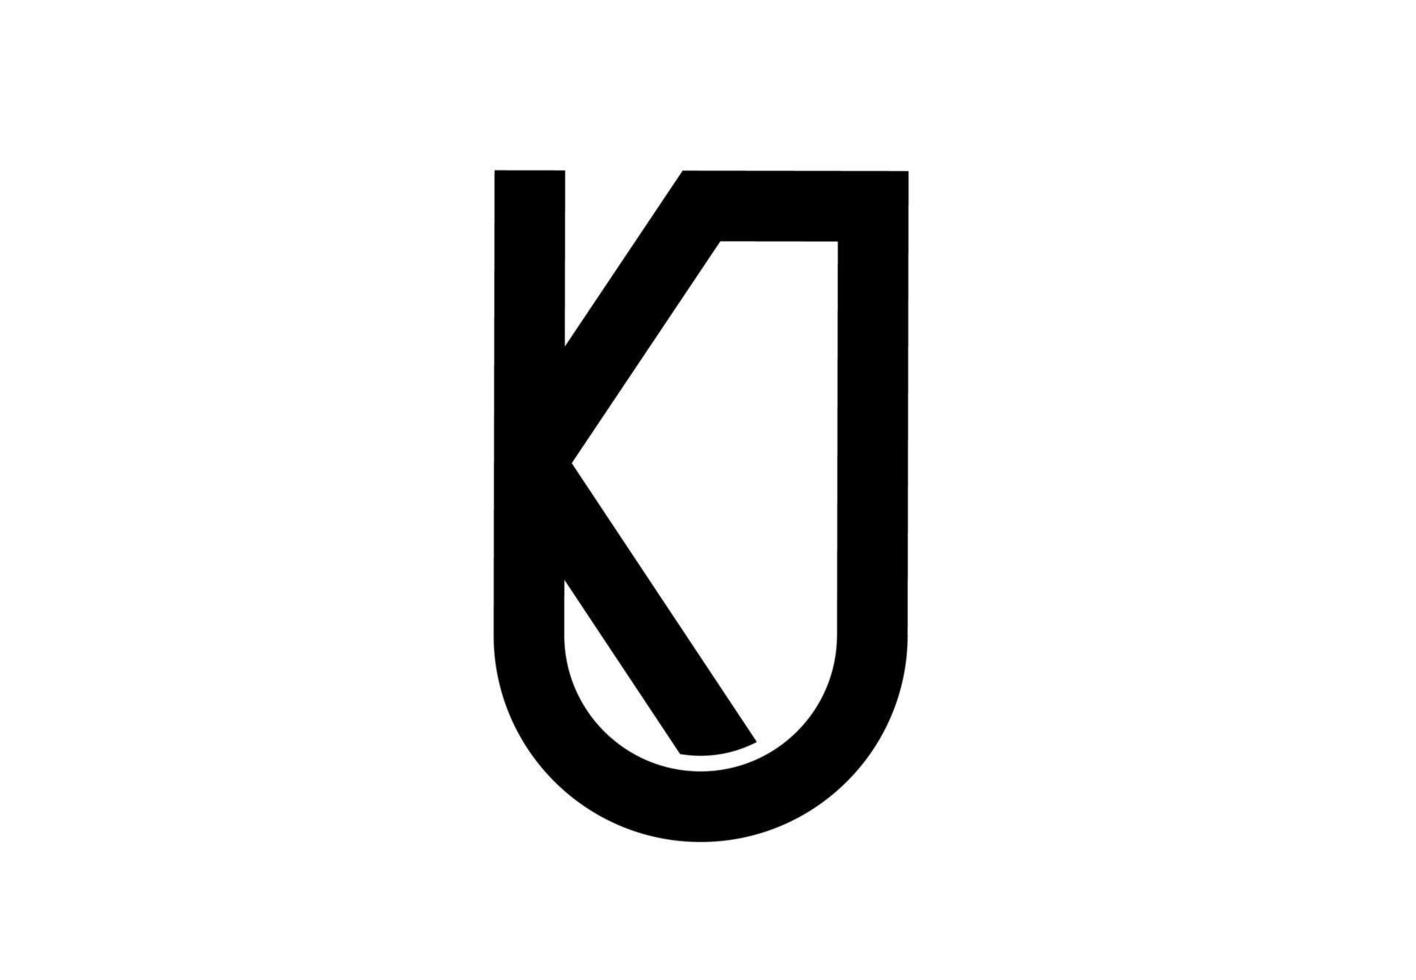 kj jk kj första bokstaven logotyp isolerad på vit bakgrund vektor